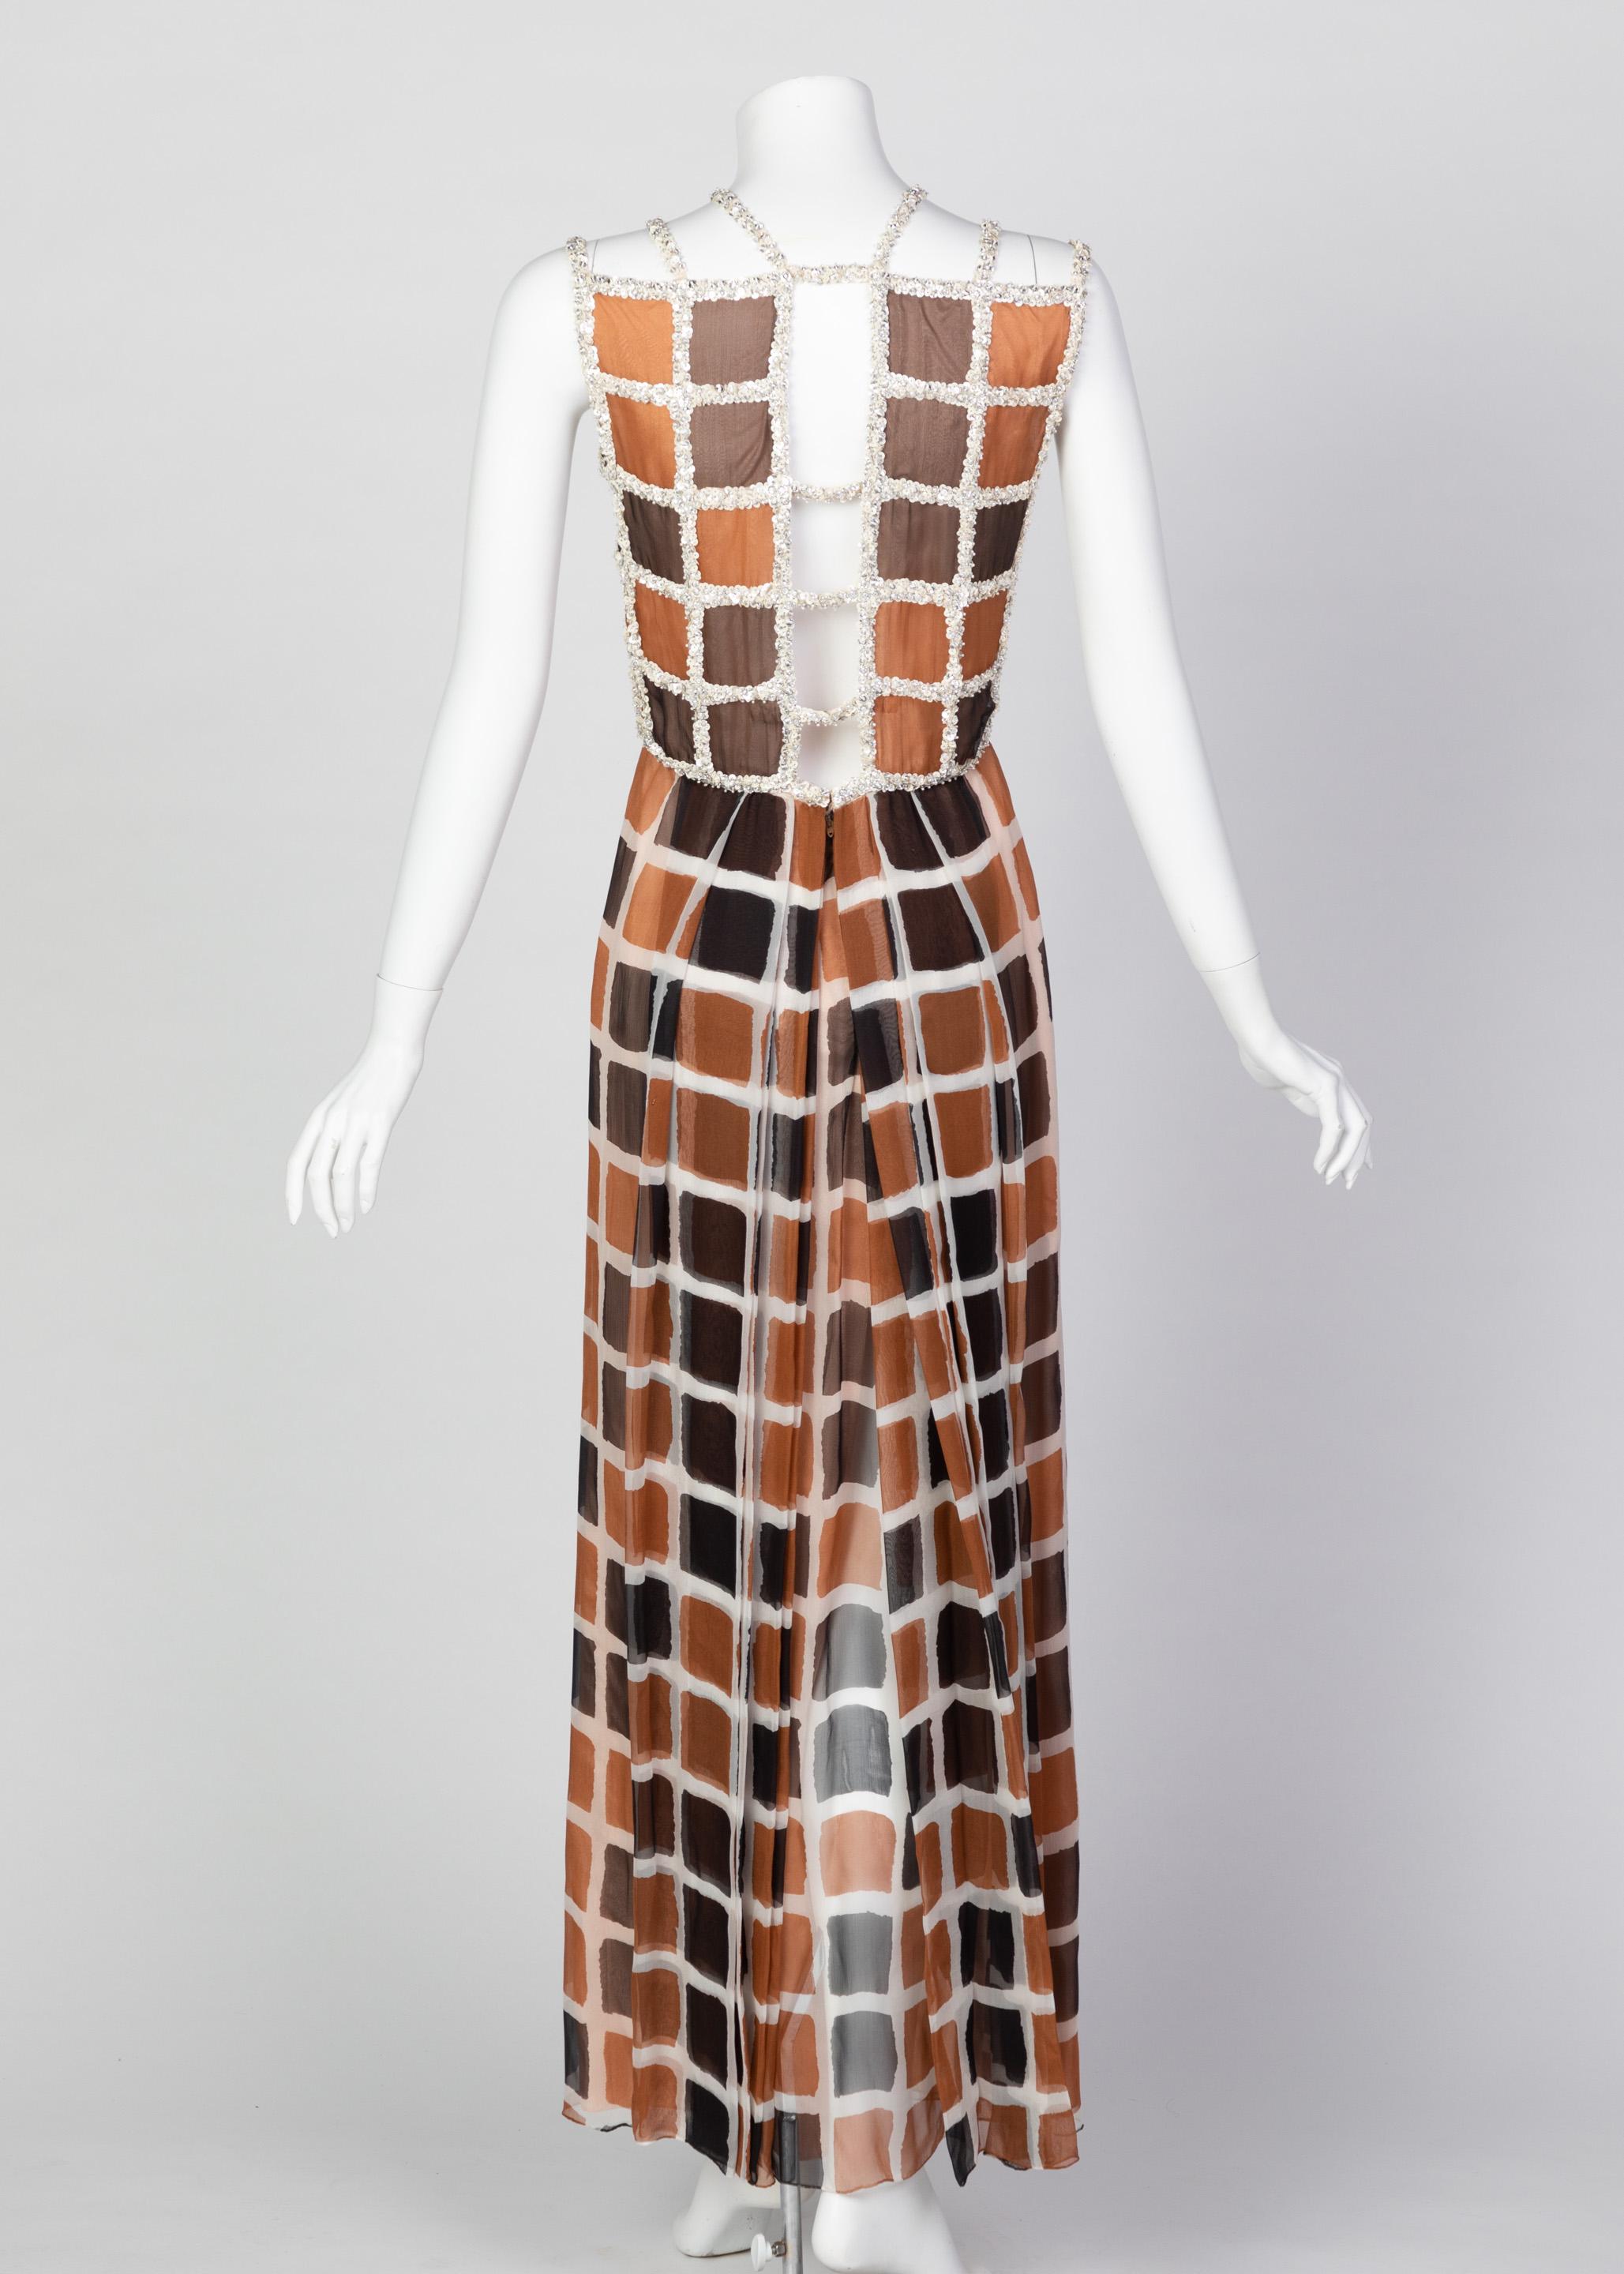 James Galanos Couture Chiffon Dress with Sequins Lattice Straps, 1980s 6